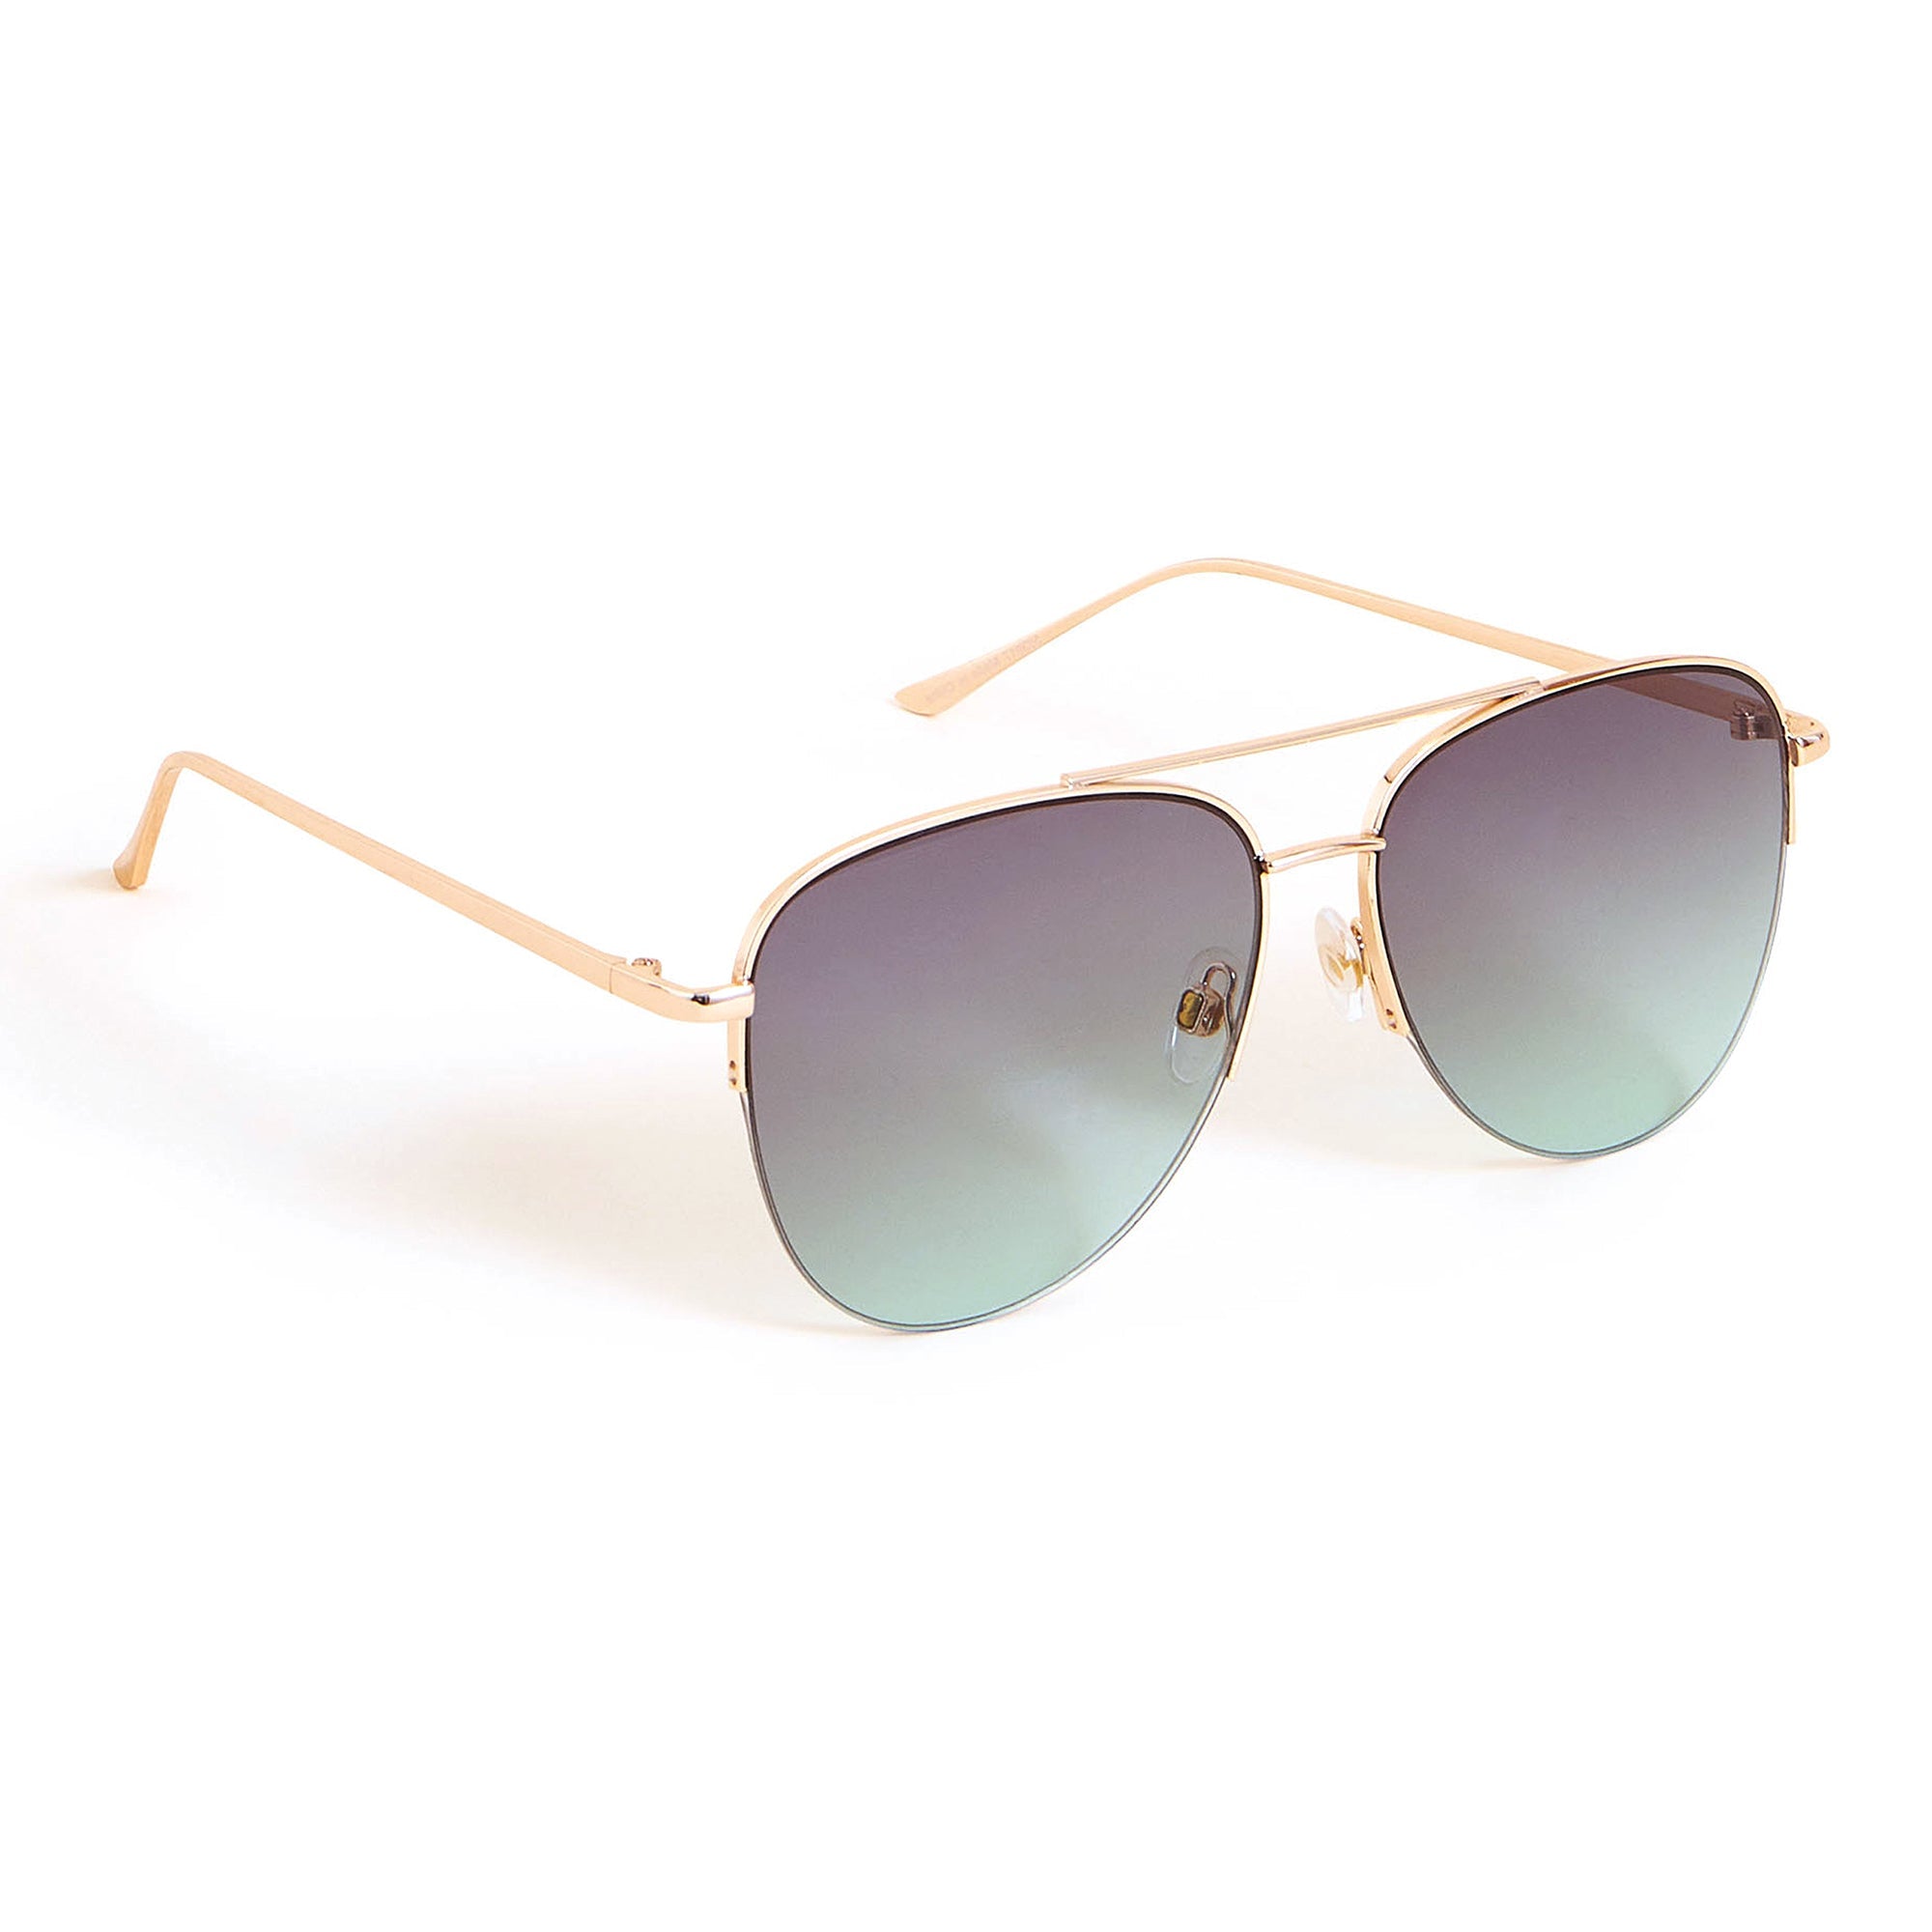 Accessorize London Women's Green Half Frame Aviator Sunglasses